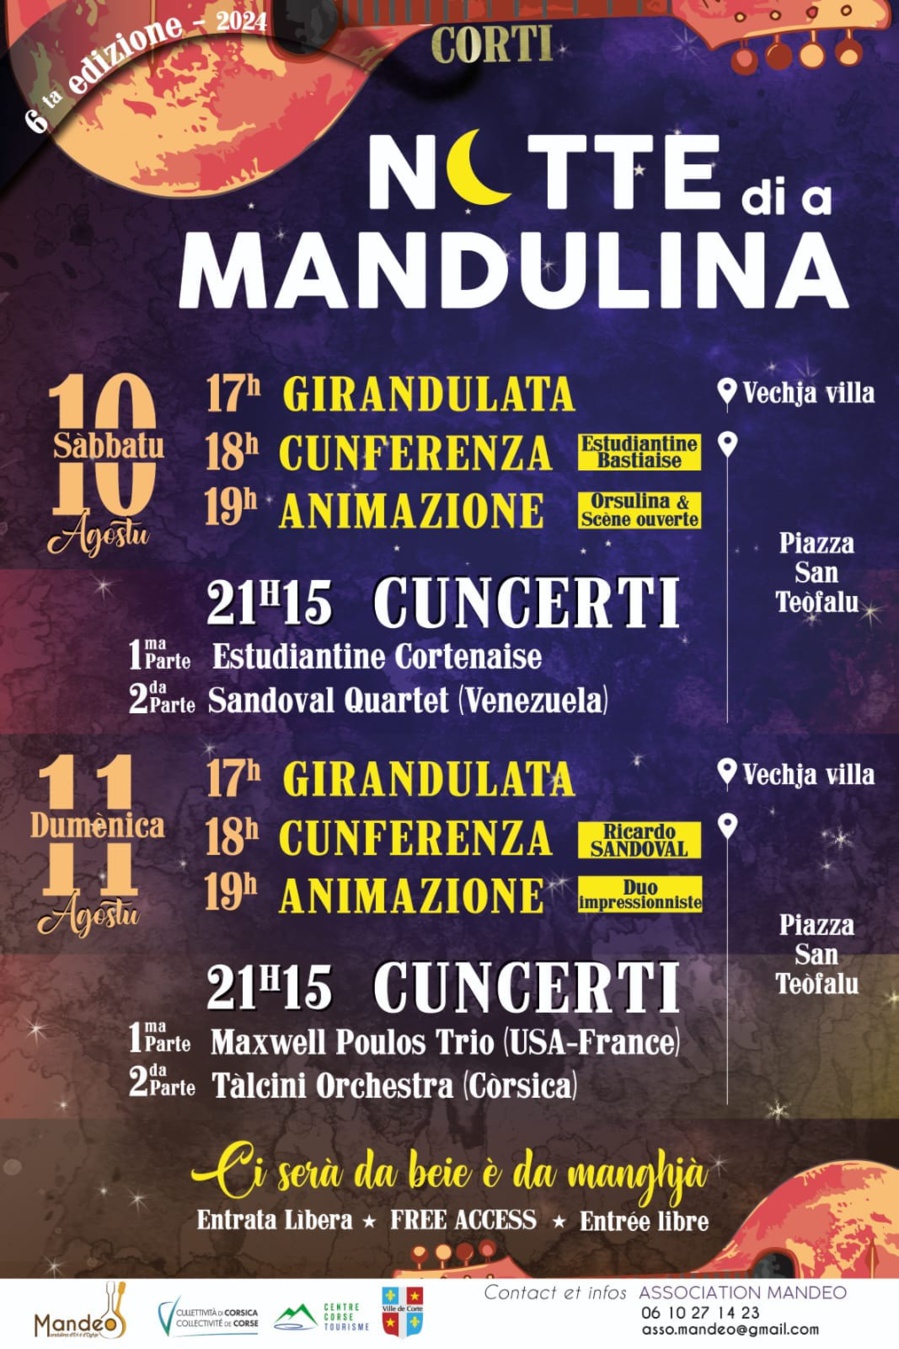 6ème édition des Notte di a Mandulina organisée par l'association Mandeo - Vechja villa / Piazza San Teofalu - Corti 